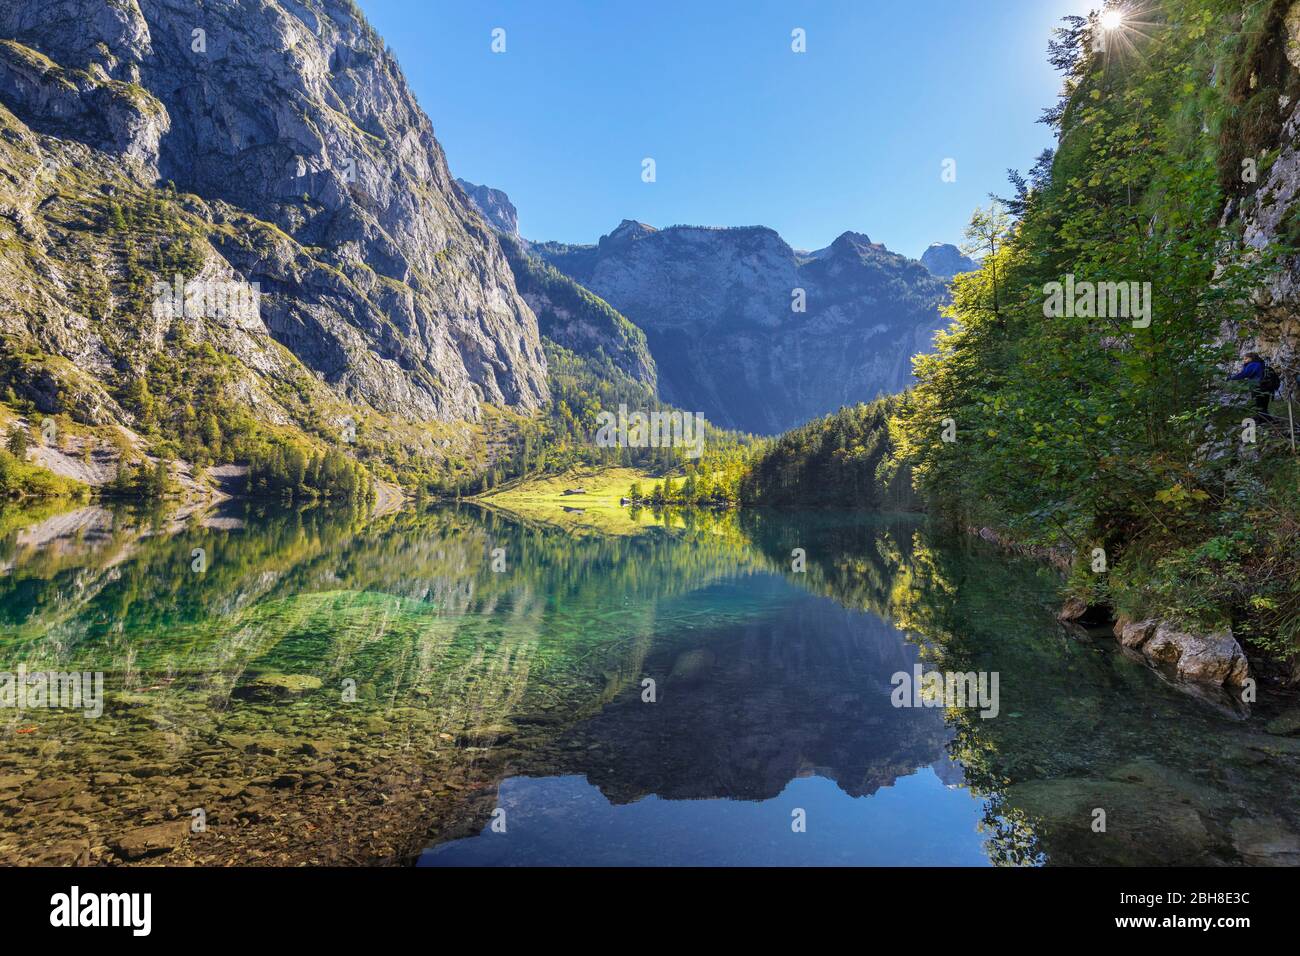 Obersee mit Blick zur Fischunkelalm, Salet am Königssee, Berchtesgadener Land, Nationalpark Berchtesgaden, Oberbayern, Bayern, Allemagne Banque D'Images